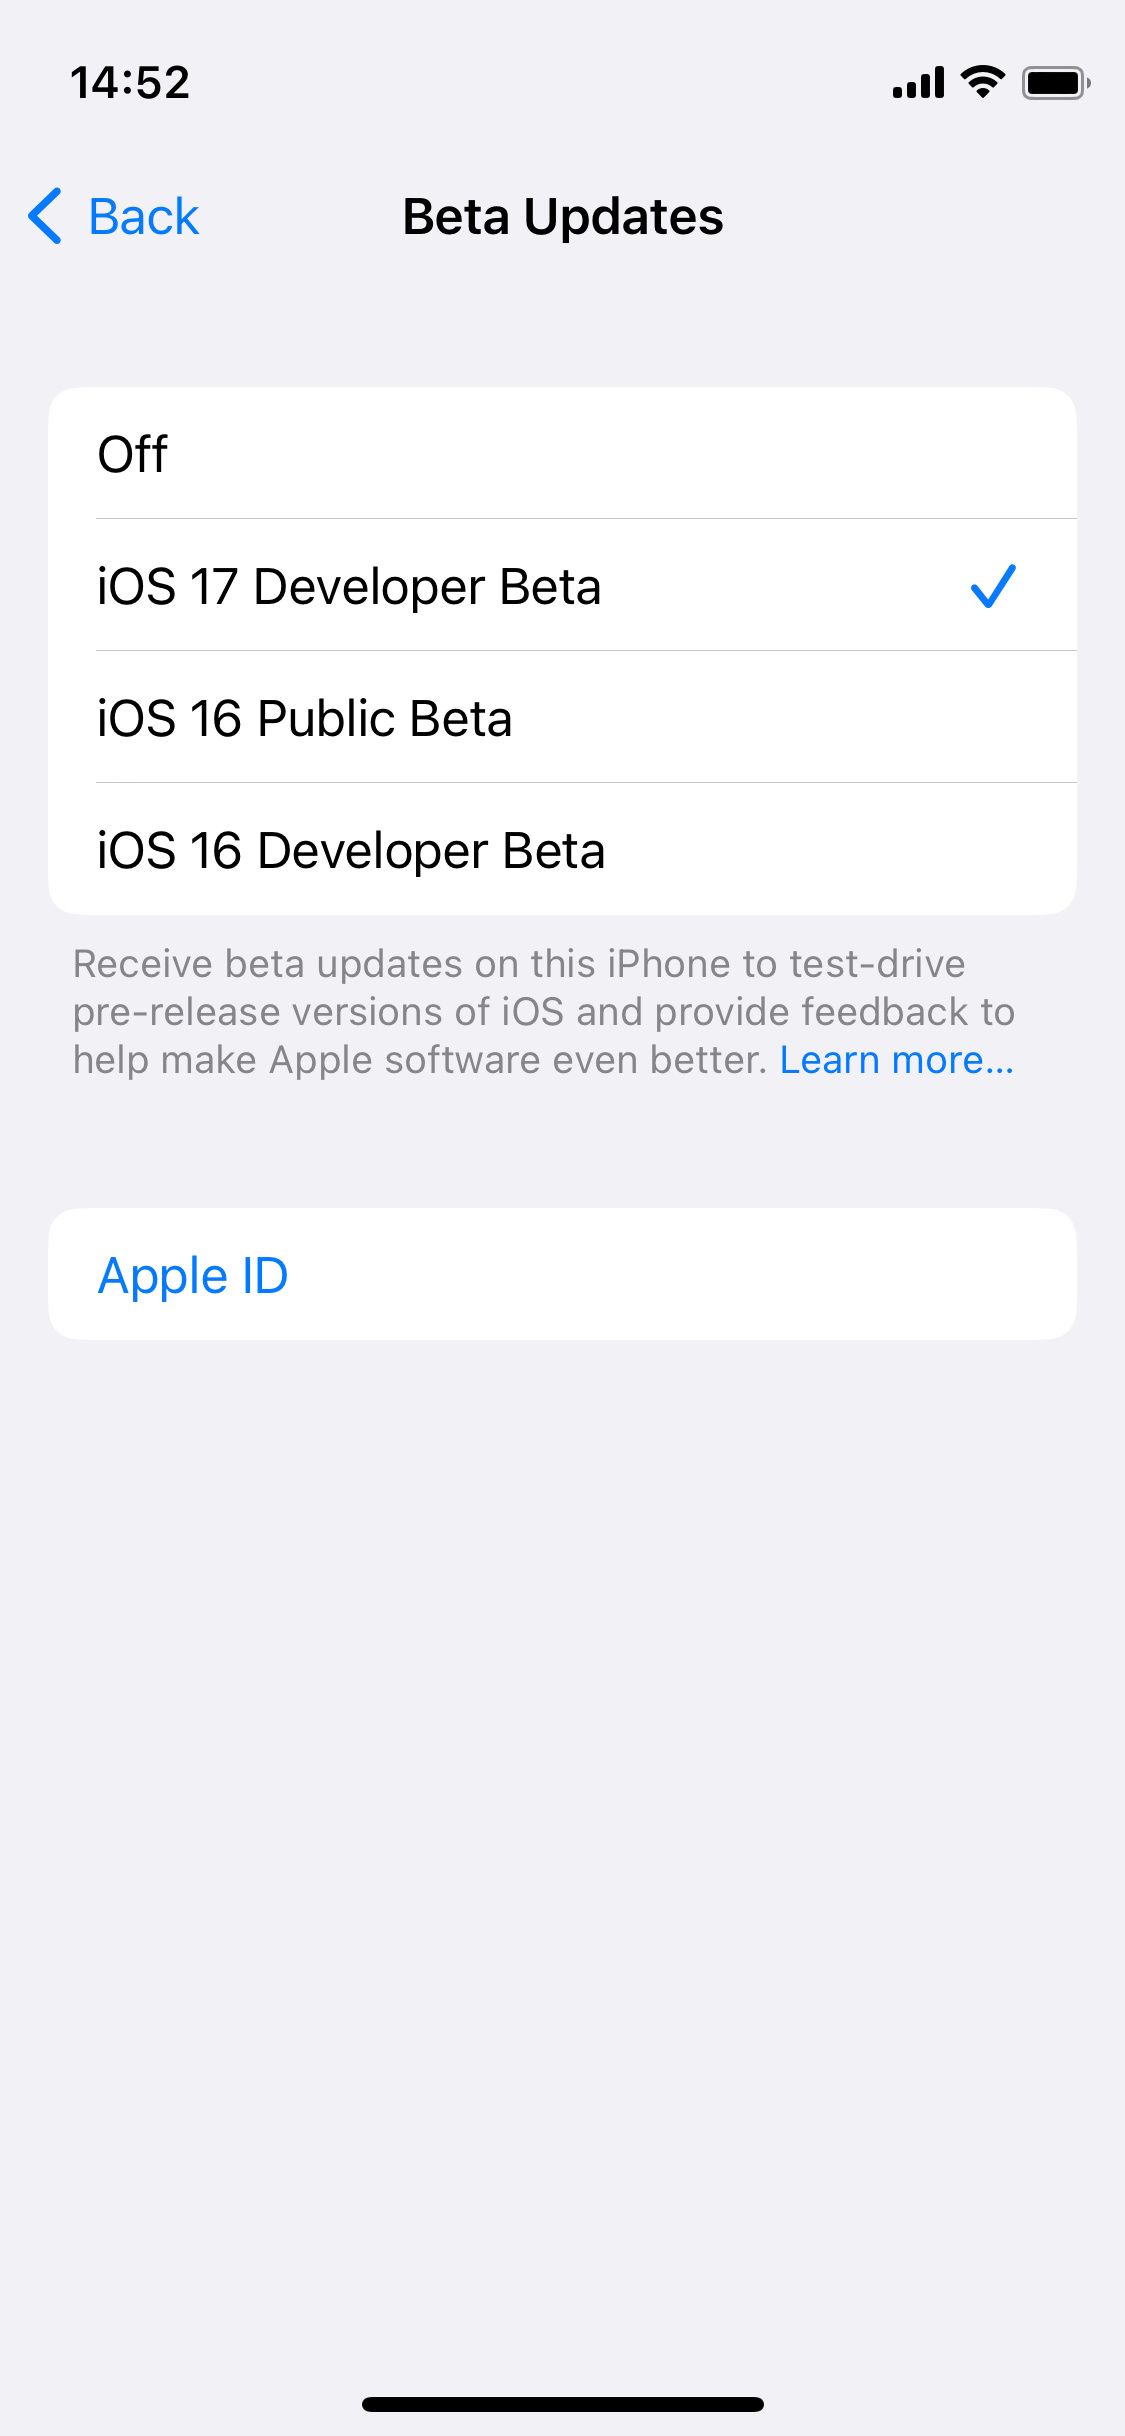 3. Beta update options in iPhone settings